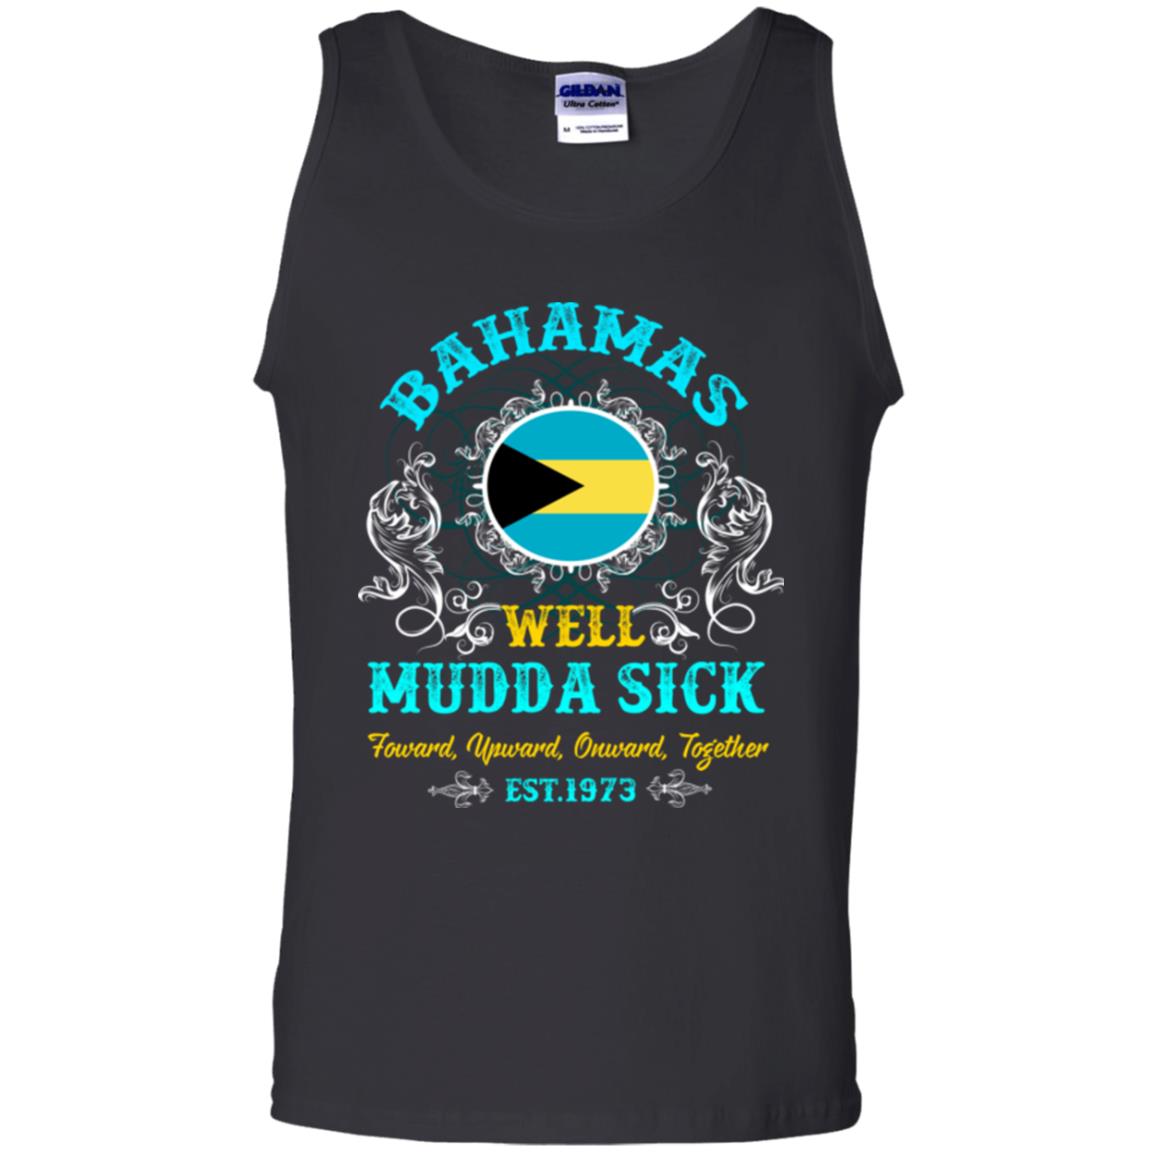 Bahamas Well Mudda Sick Foward Upward Onward Together Est1973 T-shirt